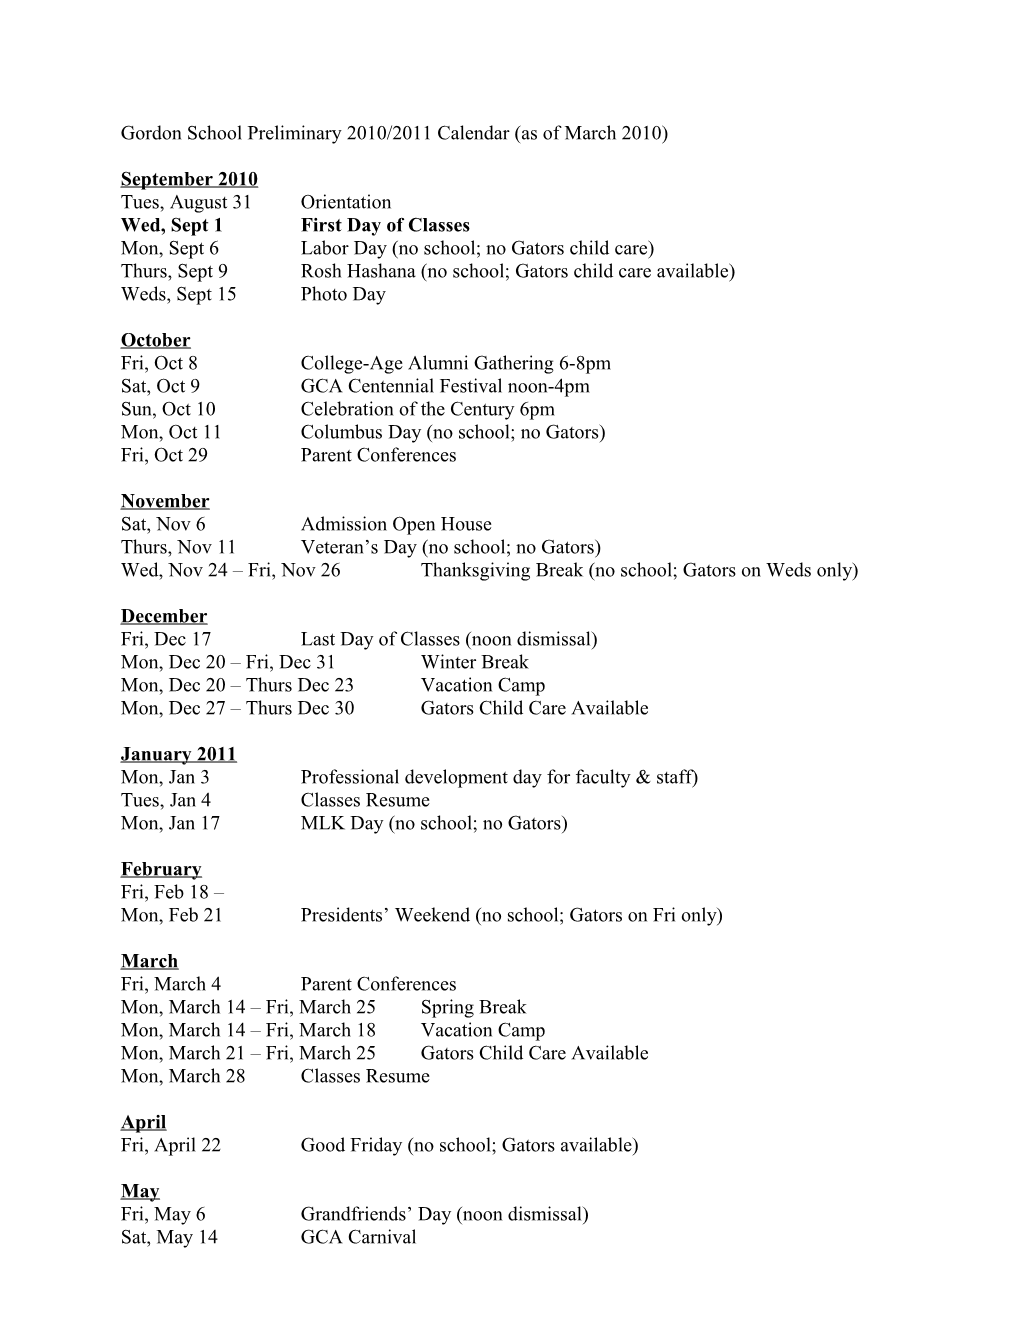 Gordon School Most Preliminary 2010/2011 Calendar (As of Jan 2010)